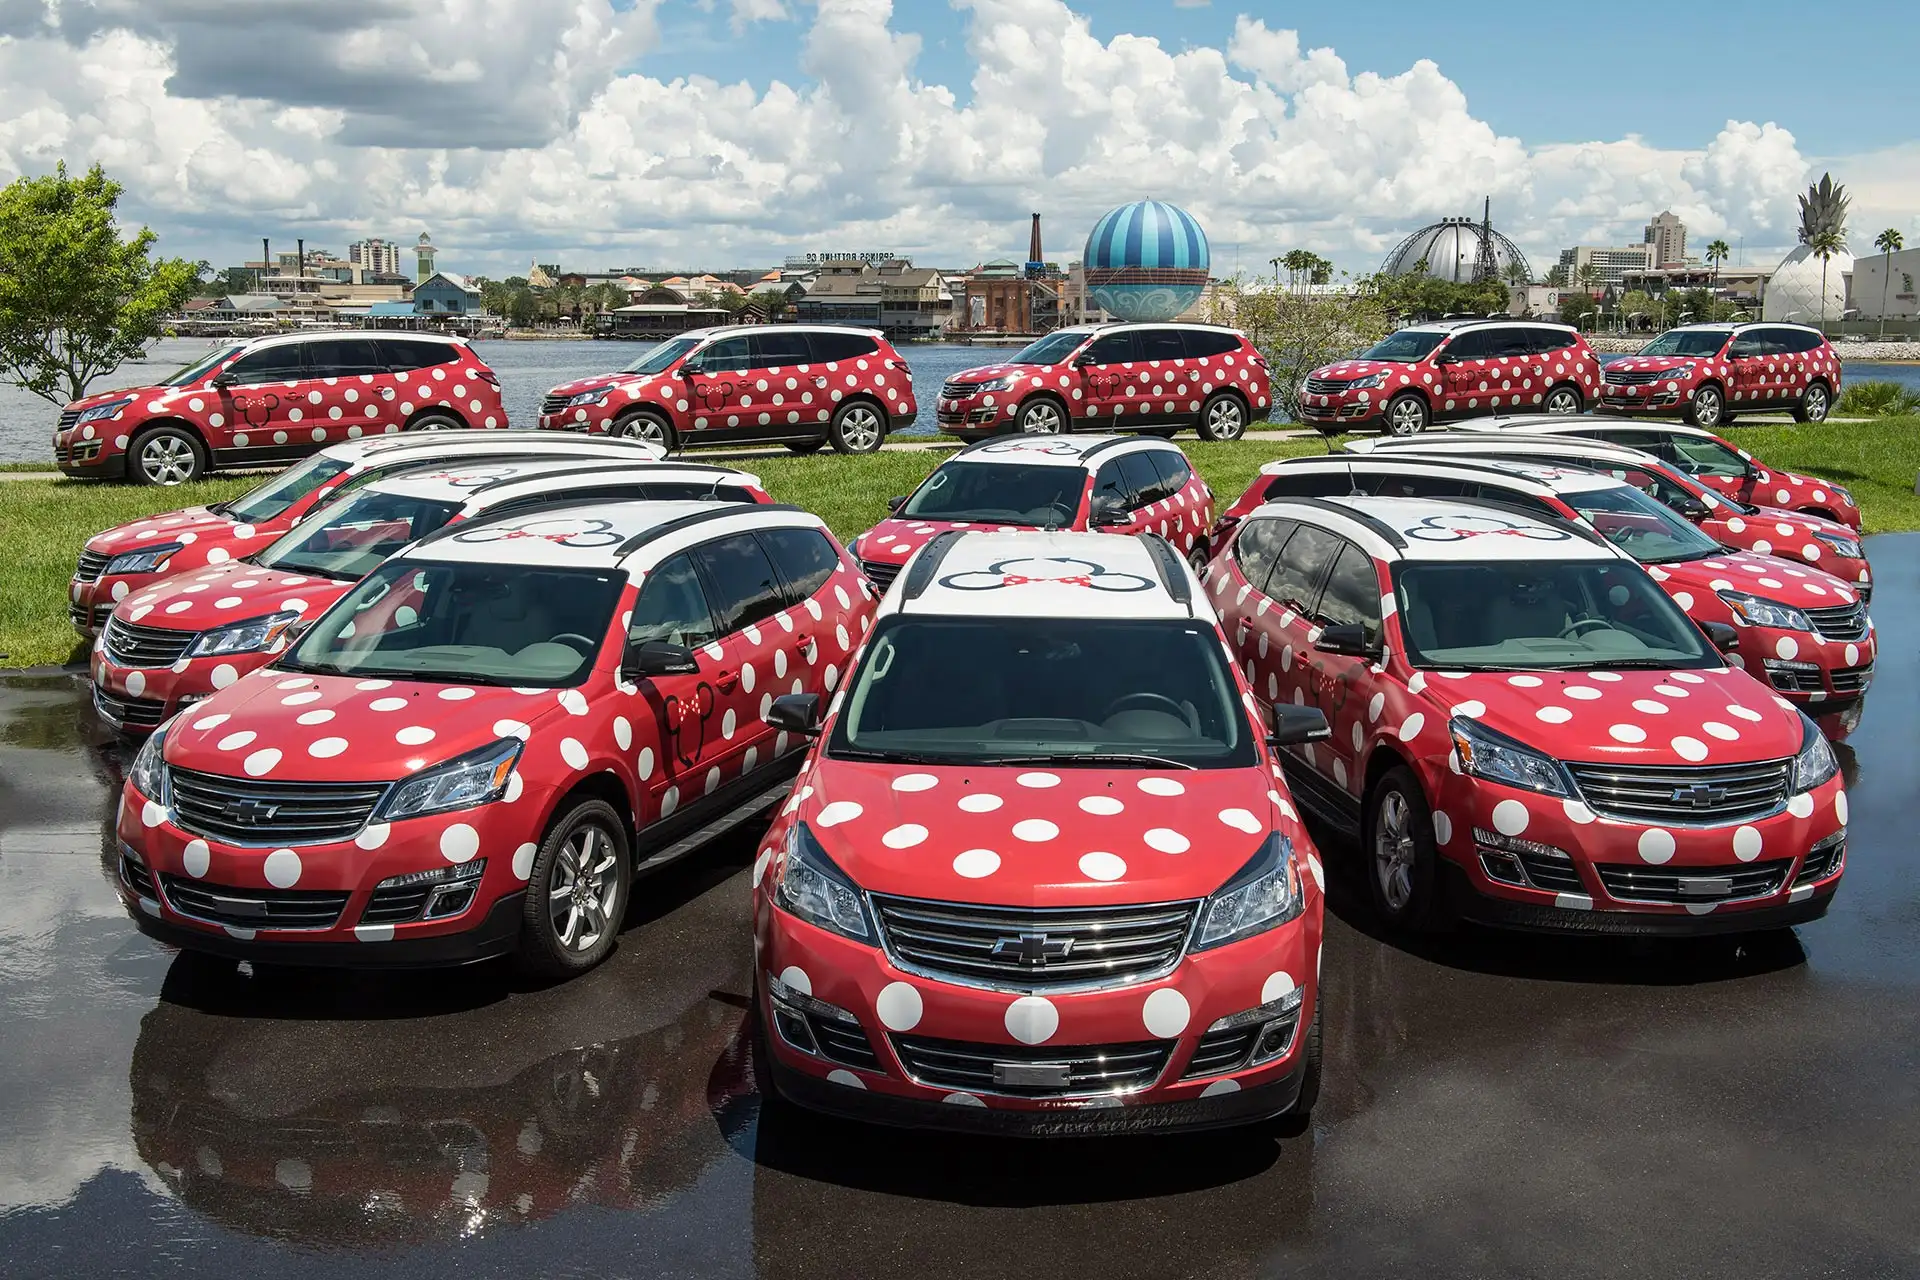 Minnie Van transportation service at Disney World in Florida.